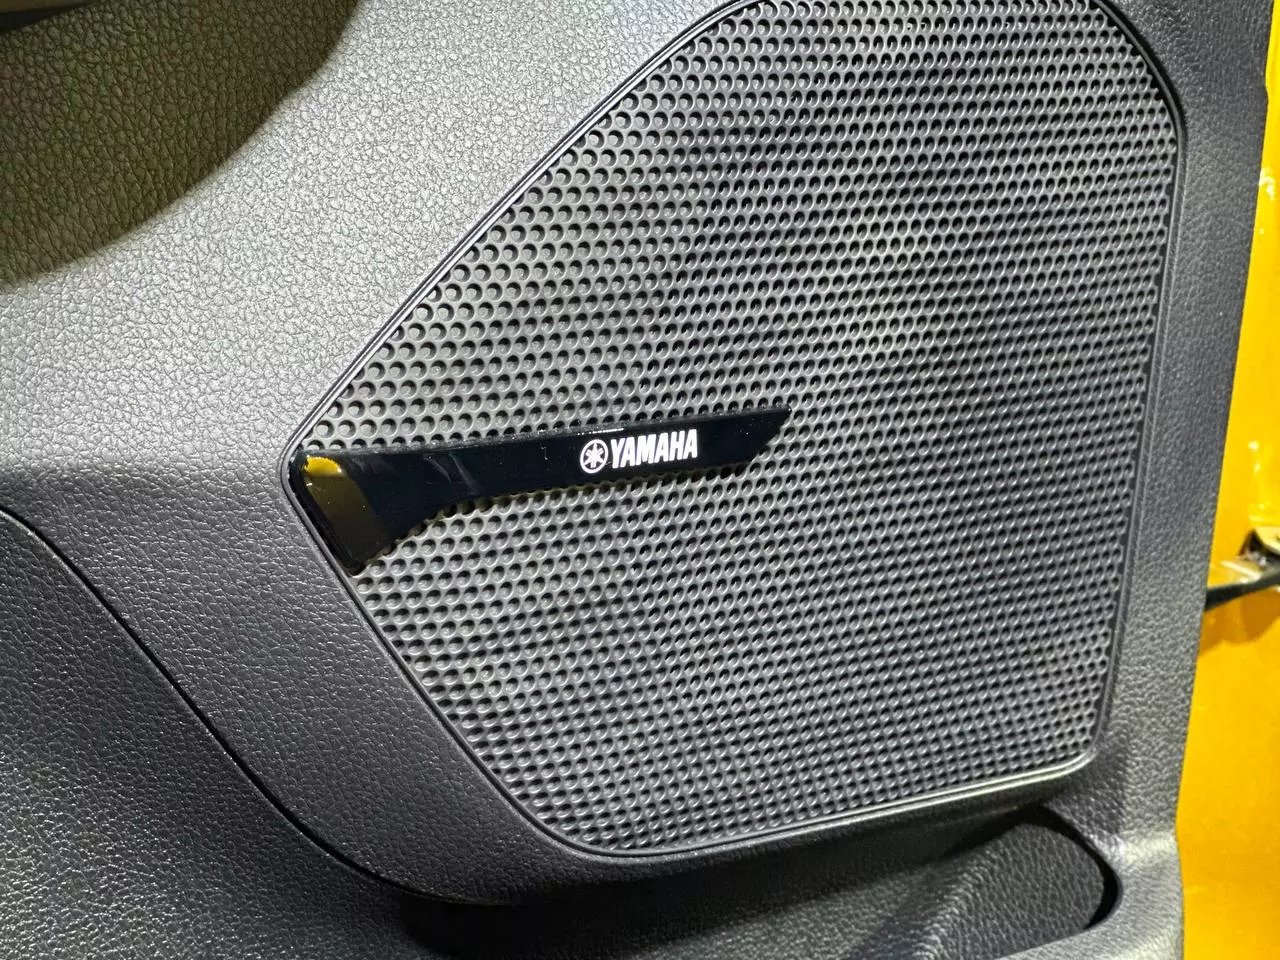 Âm thanh 8 loa Dynamic Sound Yamaha Premium trên xe Mitsubishi Xforce.